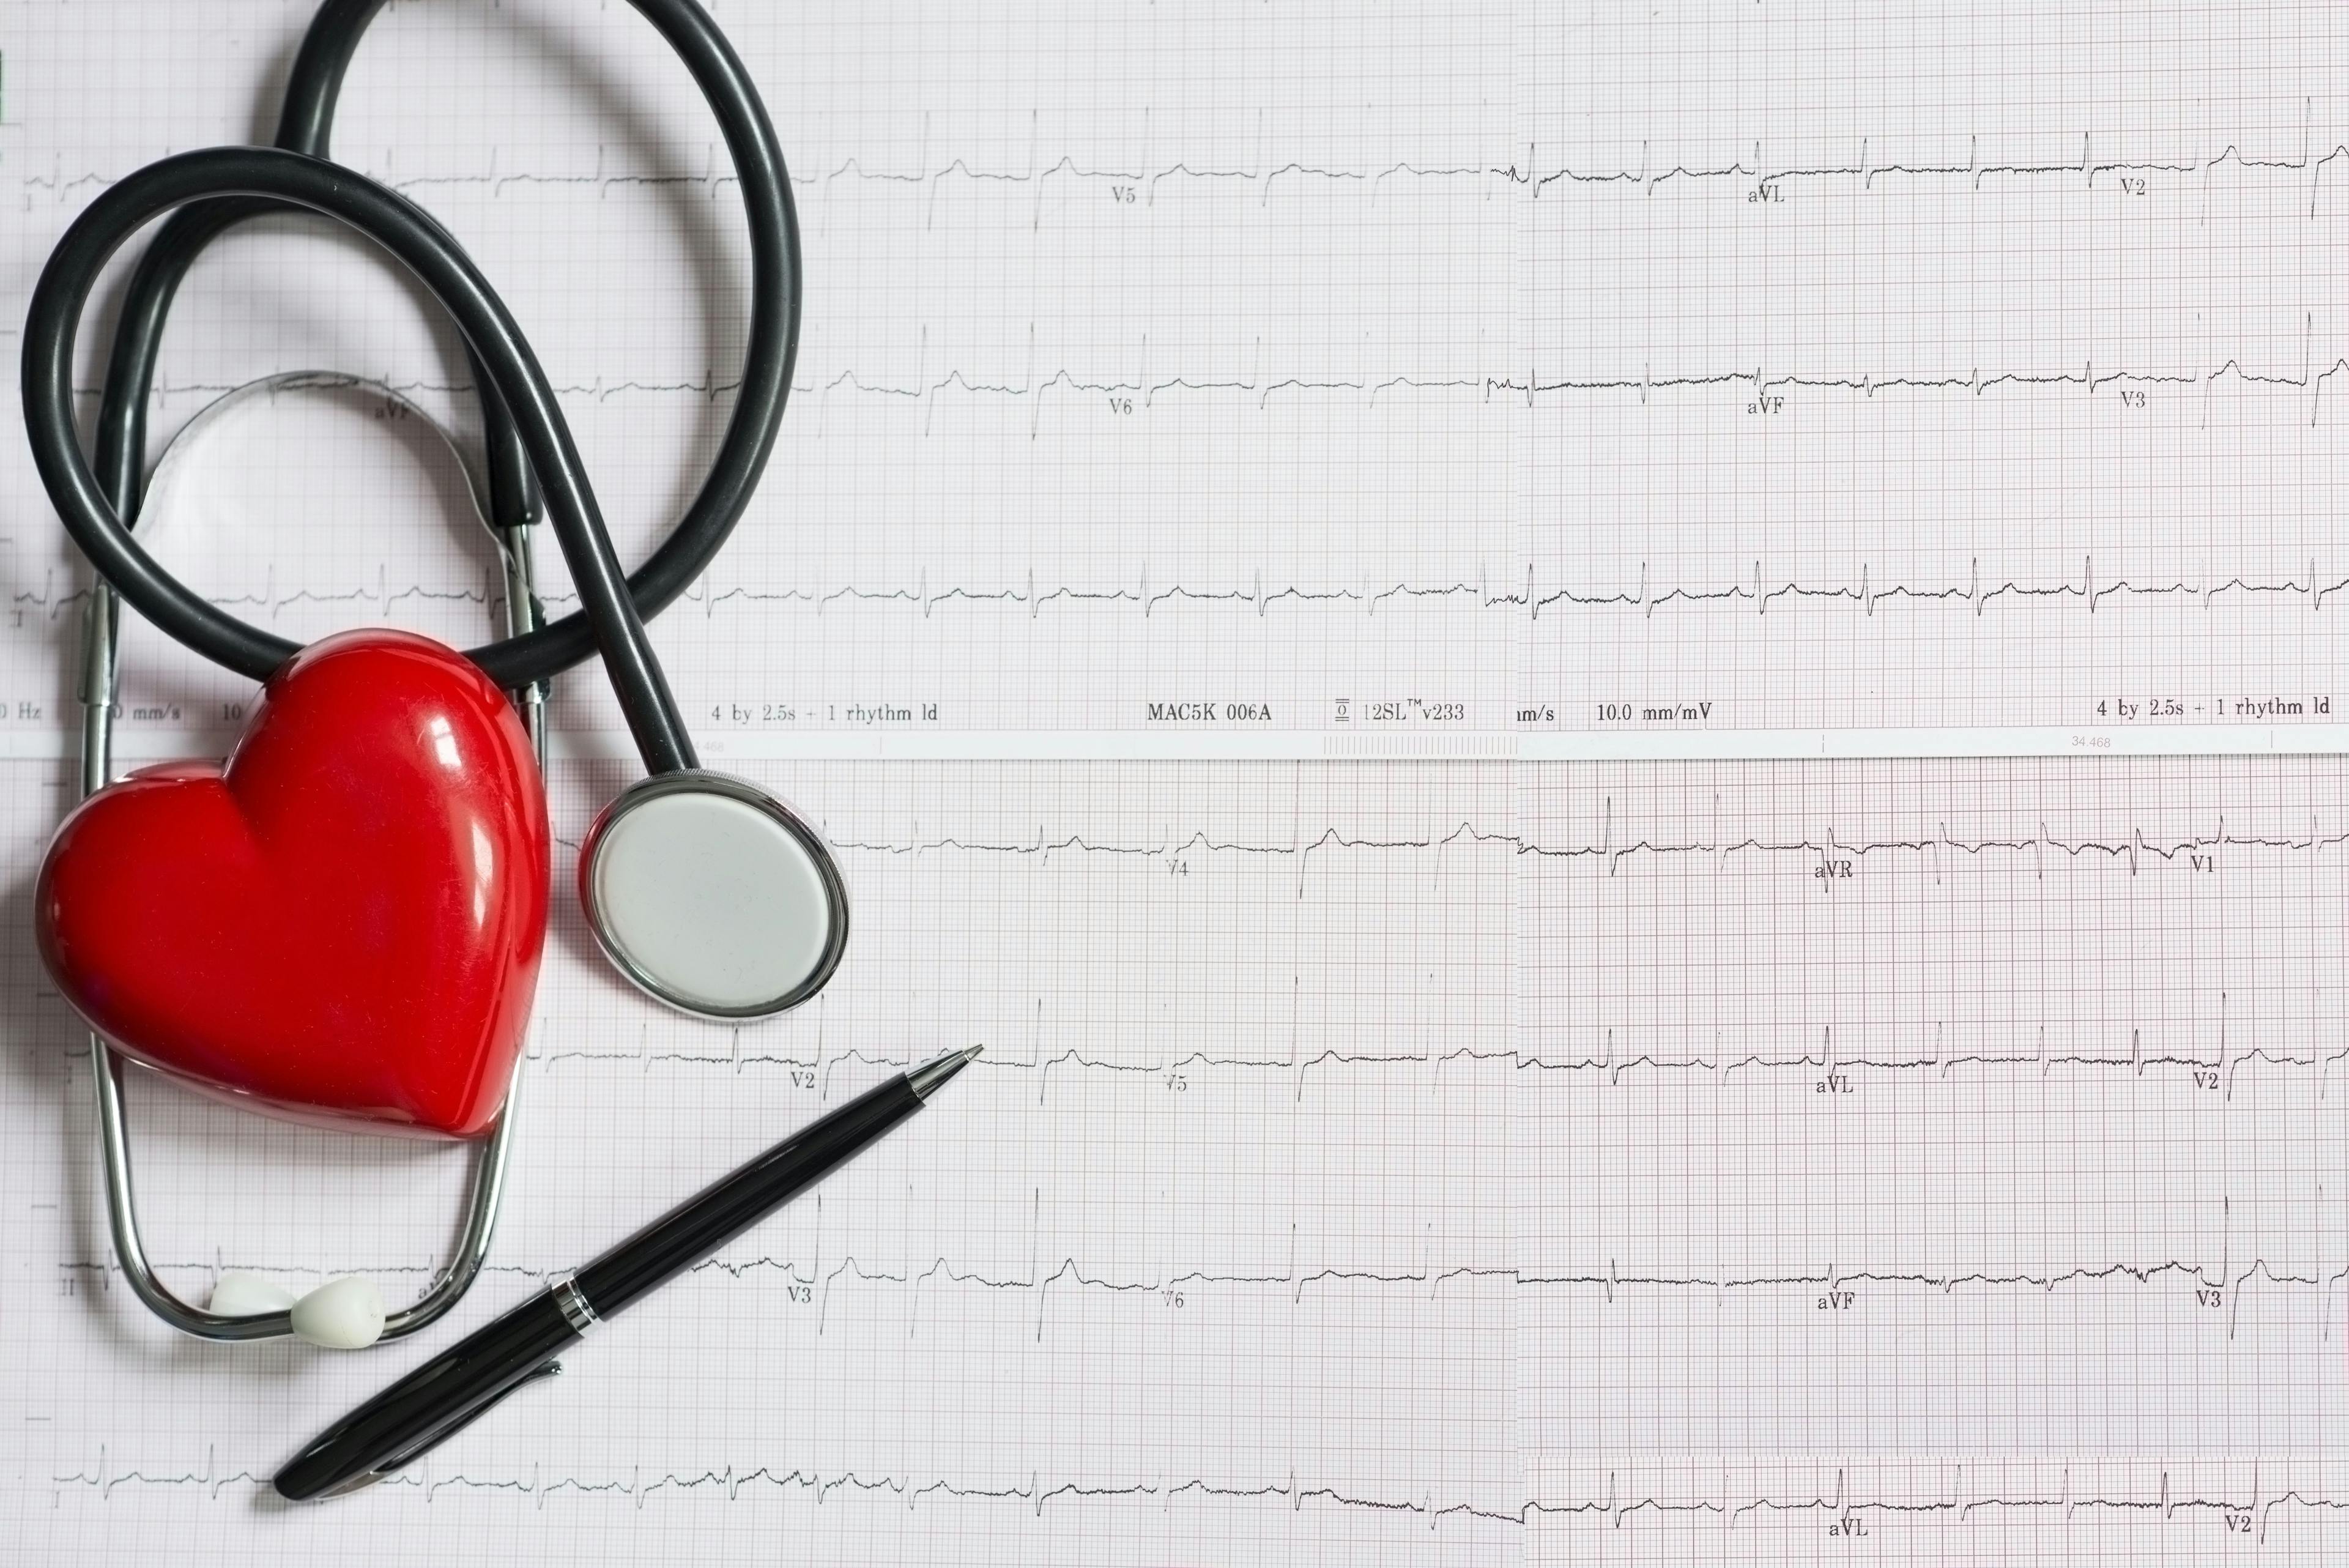 HCM Patients Experience Cardiovascular Comorbidities